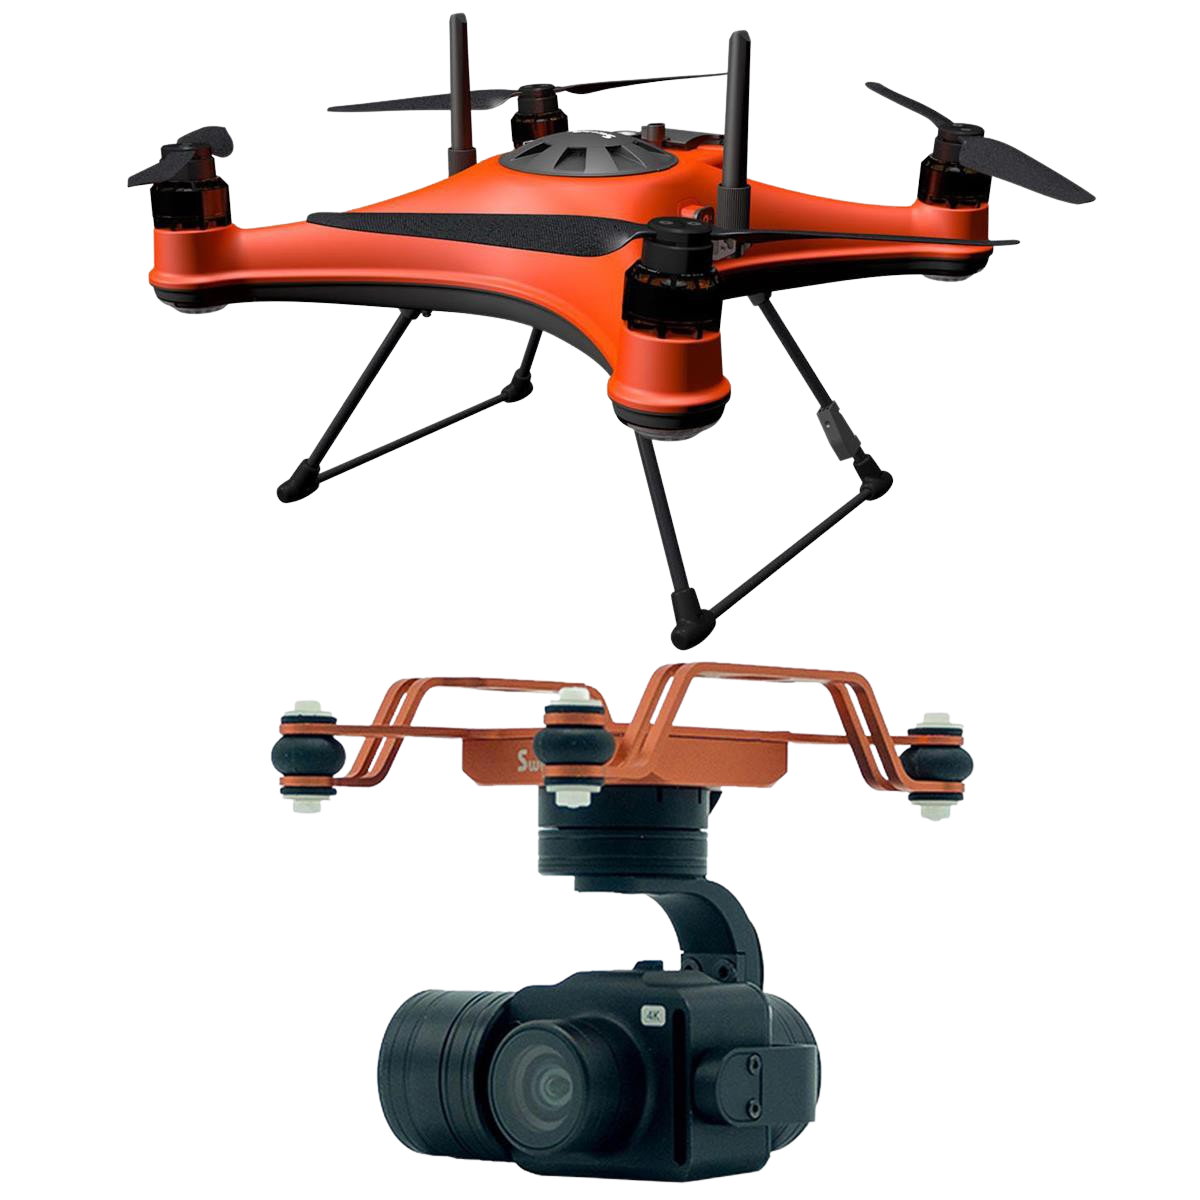 SwellPro, SwellPro Splashdrone 4 Drone Filming Bundle New